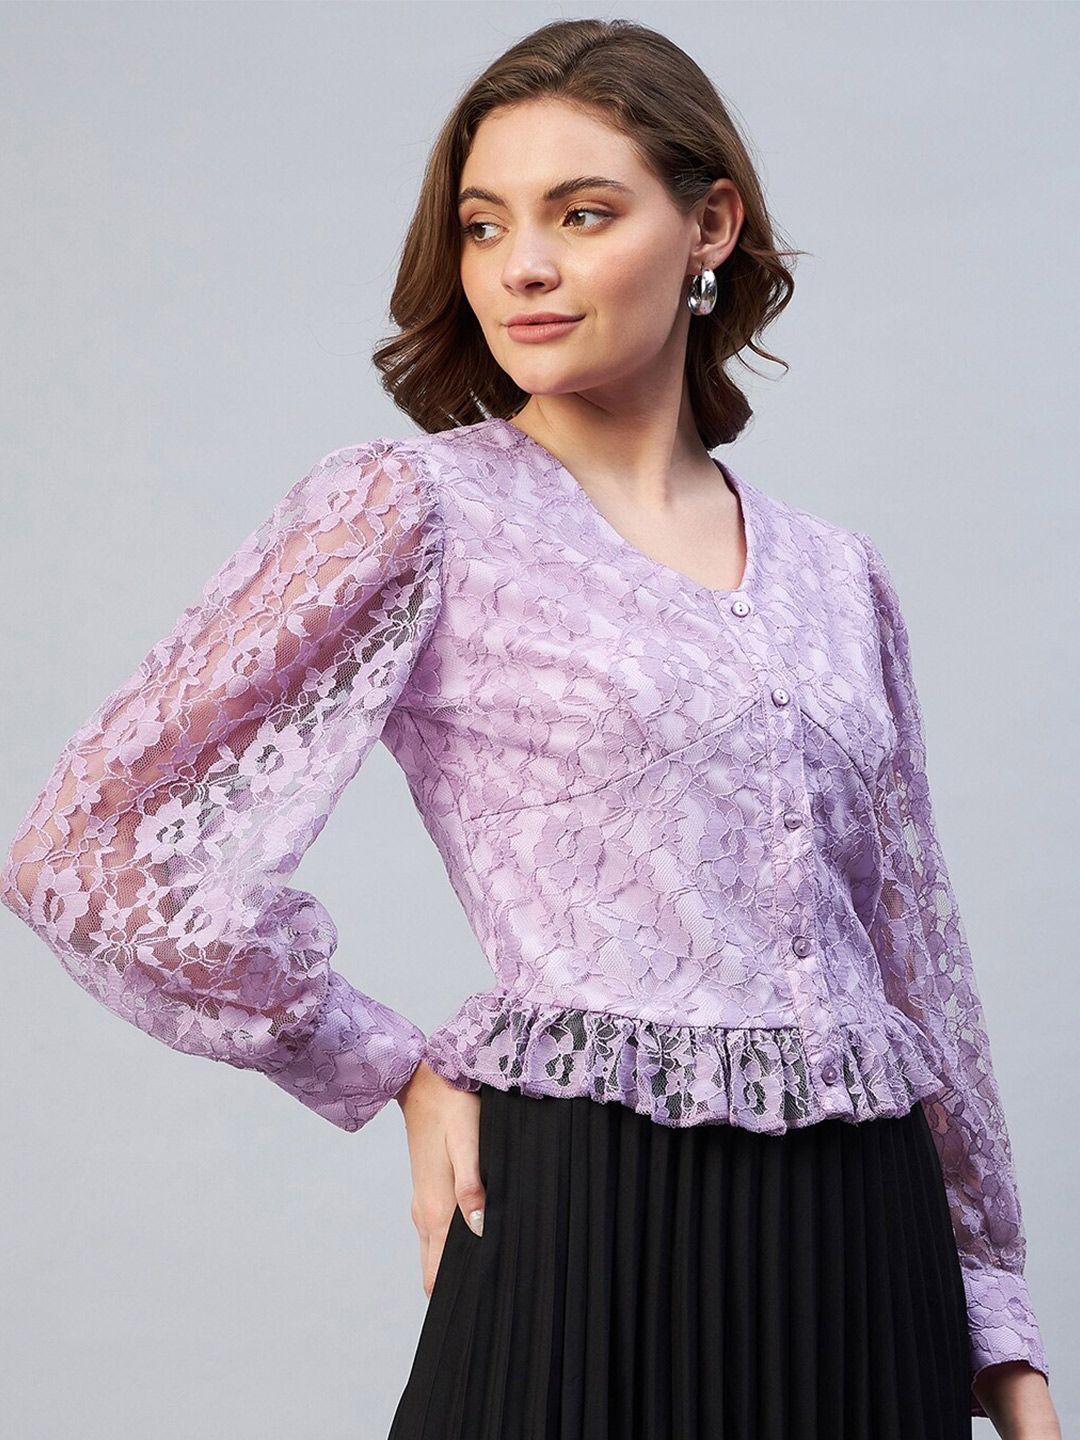 marie-claire-purple-self-design-ruffles-lace-top